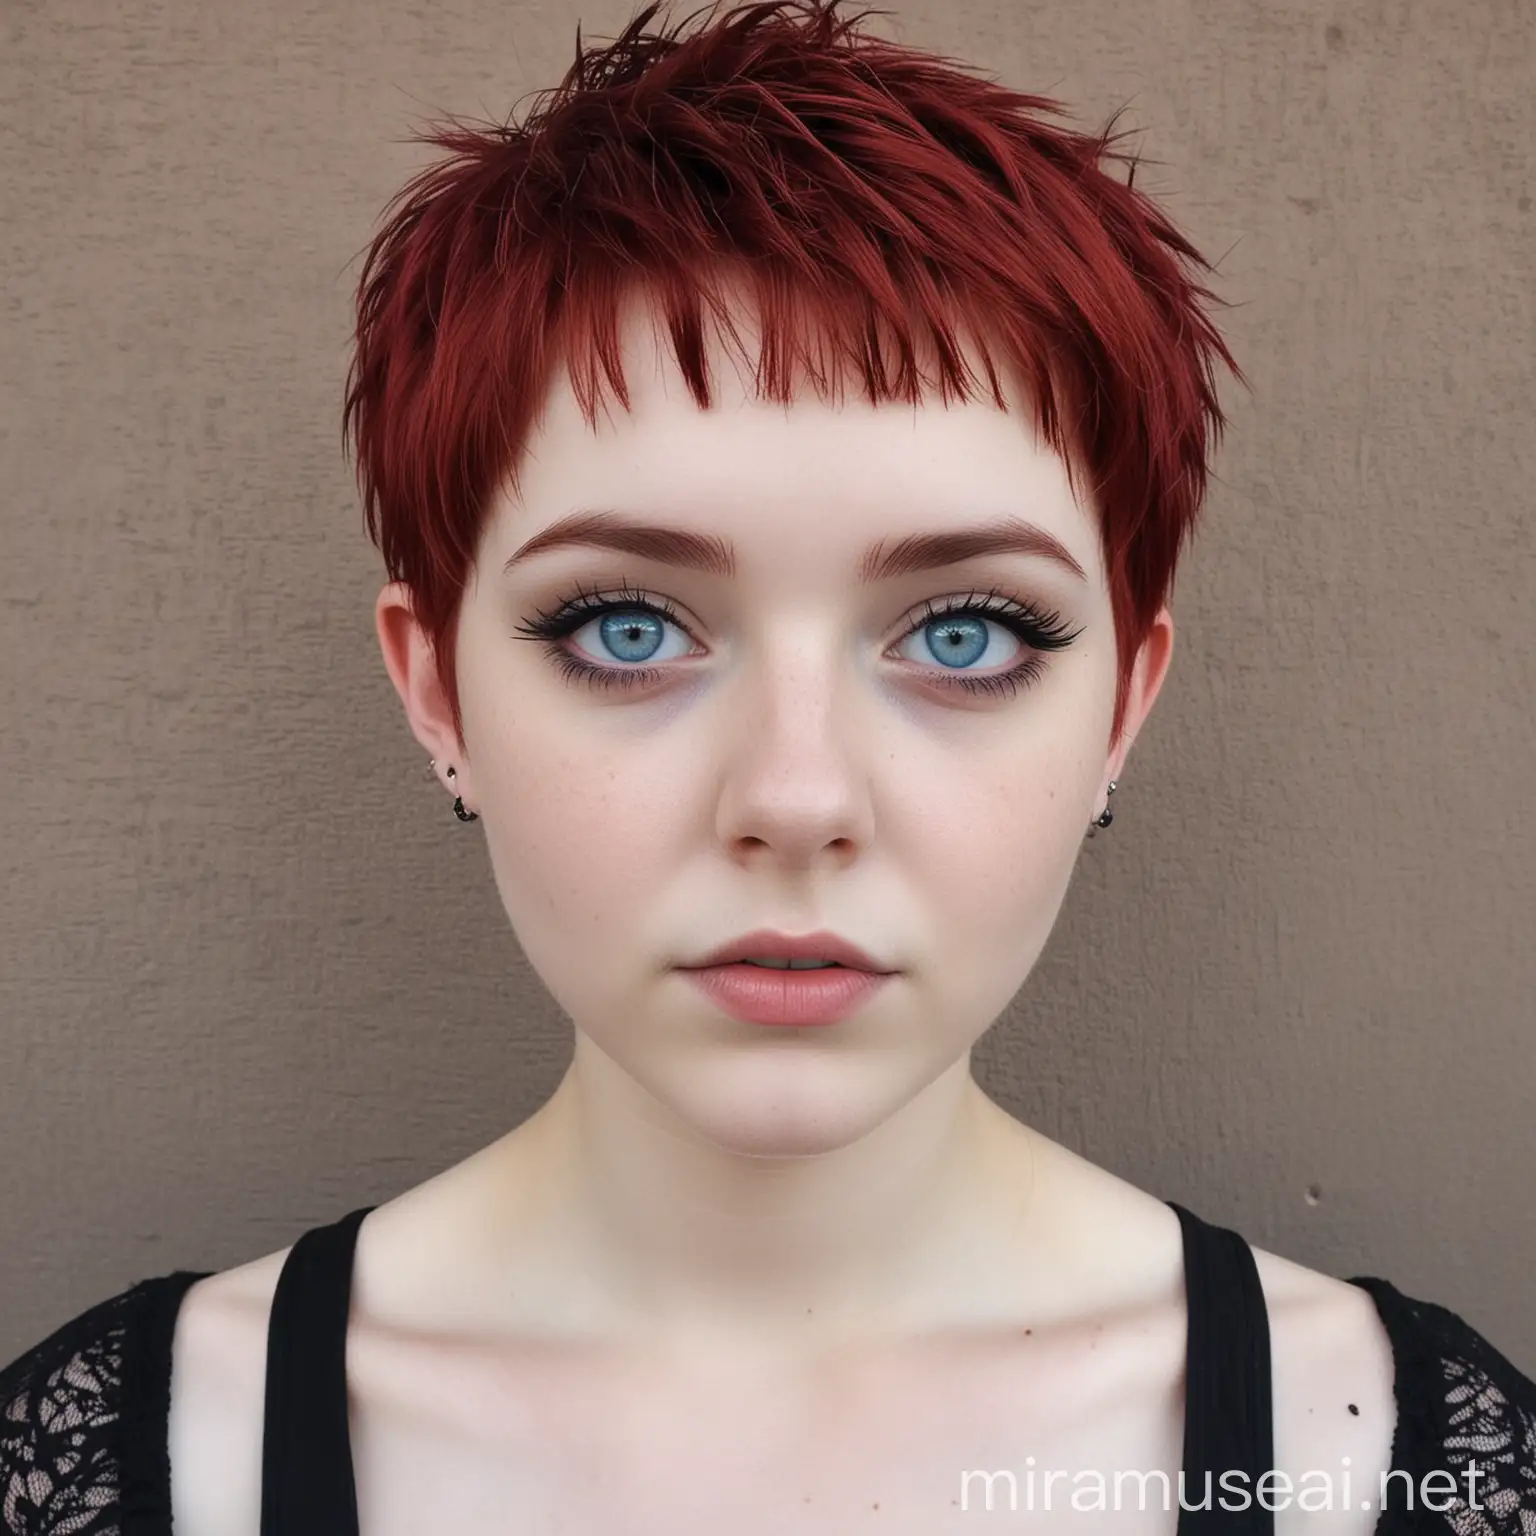 16 year old girl, goth, pixie cut, red hair, icy blue eyes 